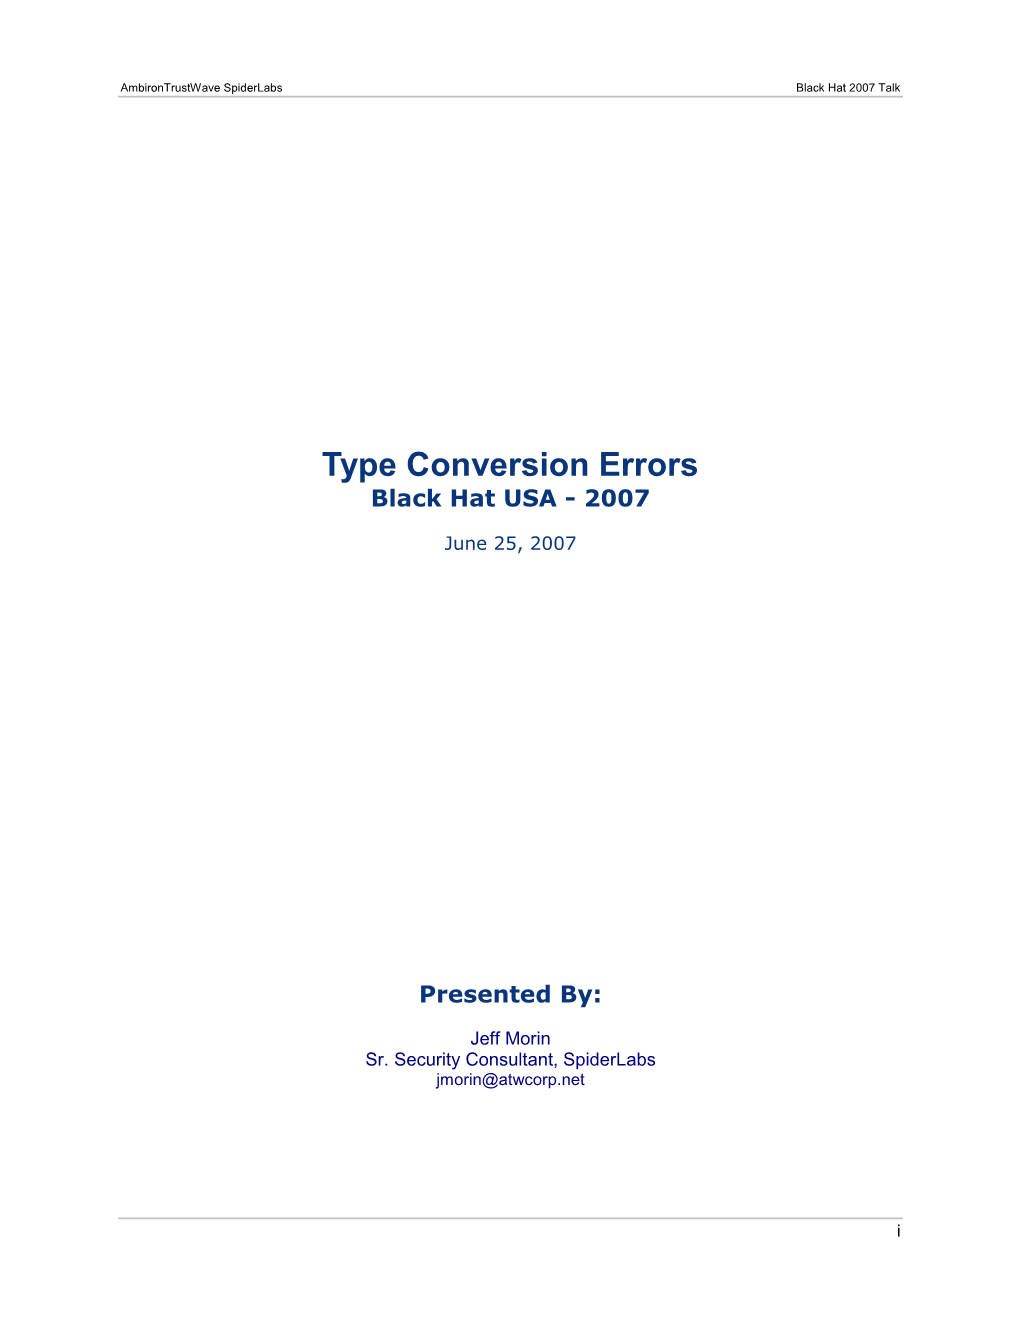 Type Conversion Errors Black Hat USA - 2007